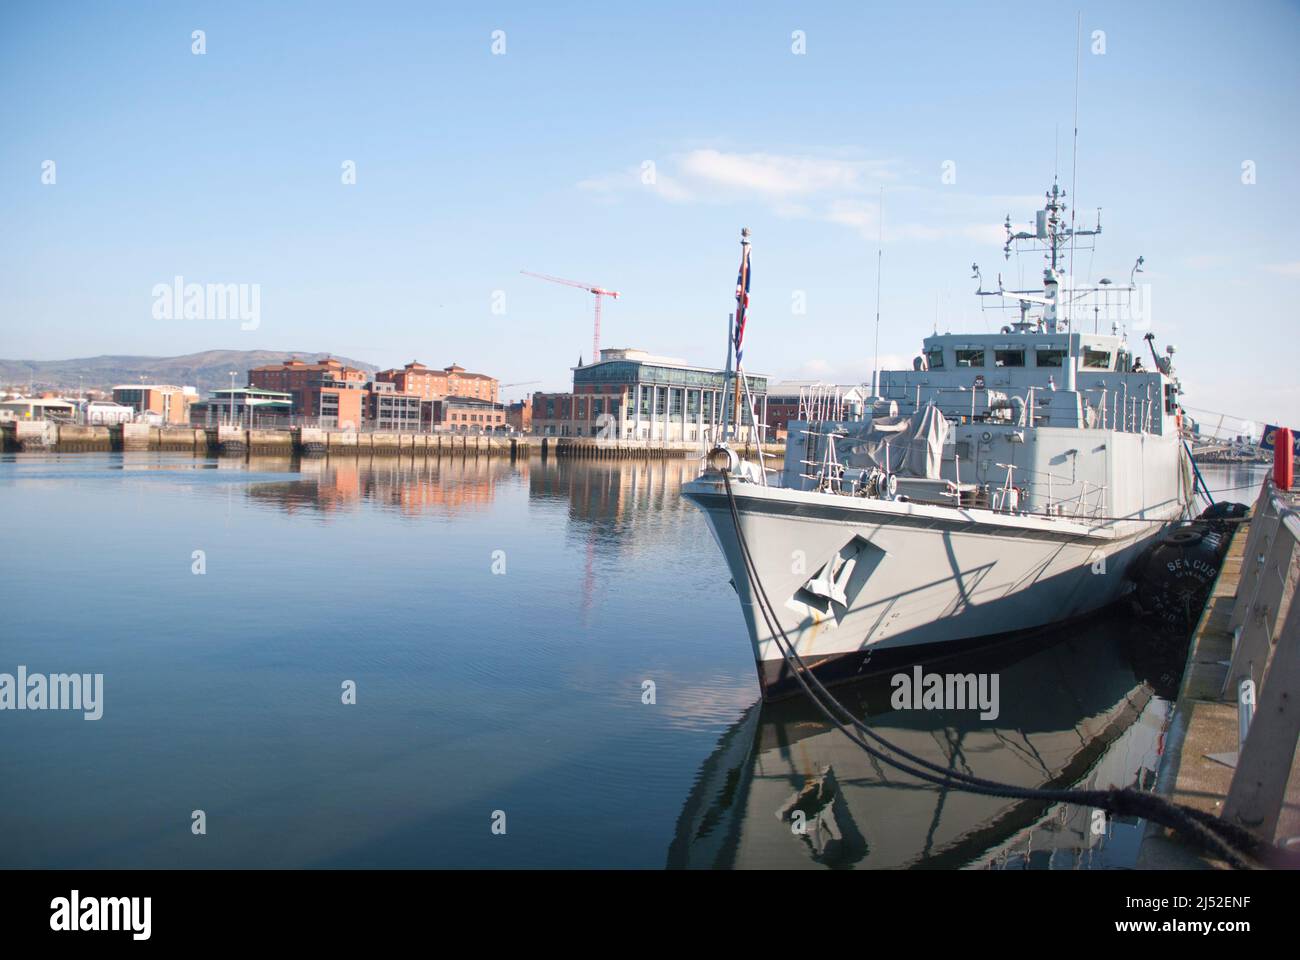 Royal Navy minesweeper HMS Bangor berthed on the River Lagan, Belfast, Northern Ireland. Stock Photo